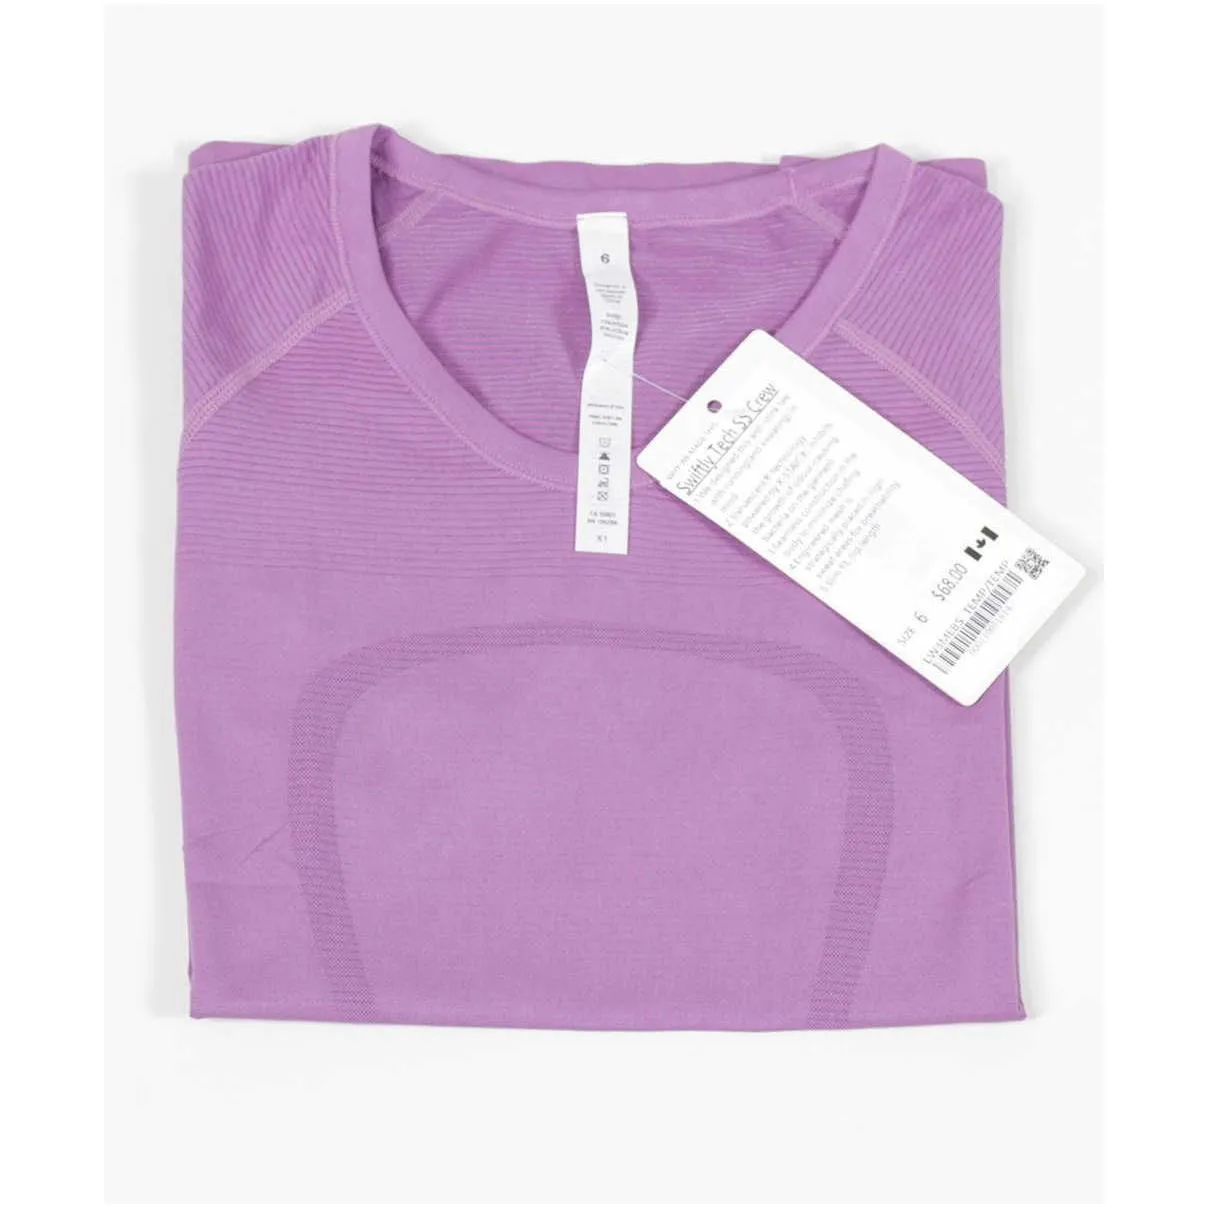 lu-2.0 swiftly tech womens short sleeved seamless yoga top t-shirt slim fit light fast dry sports shirt wicking knit fitness